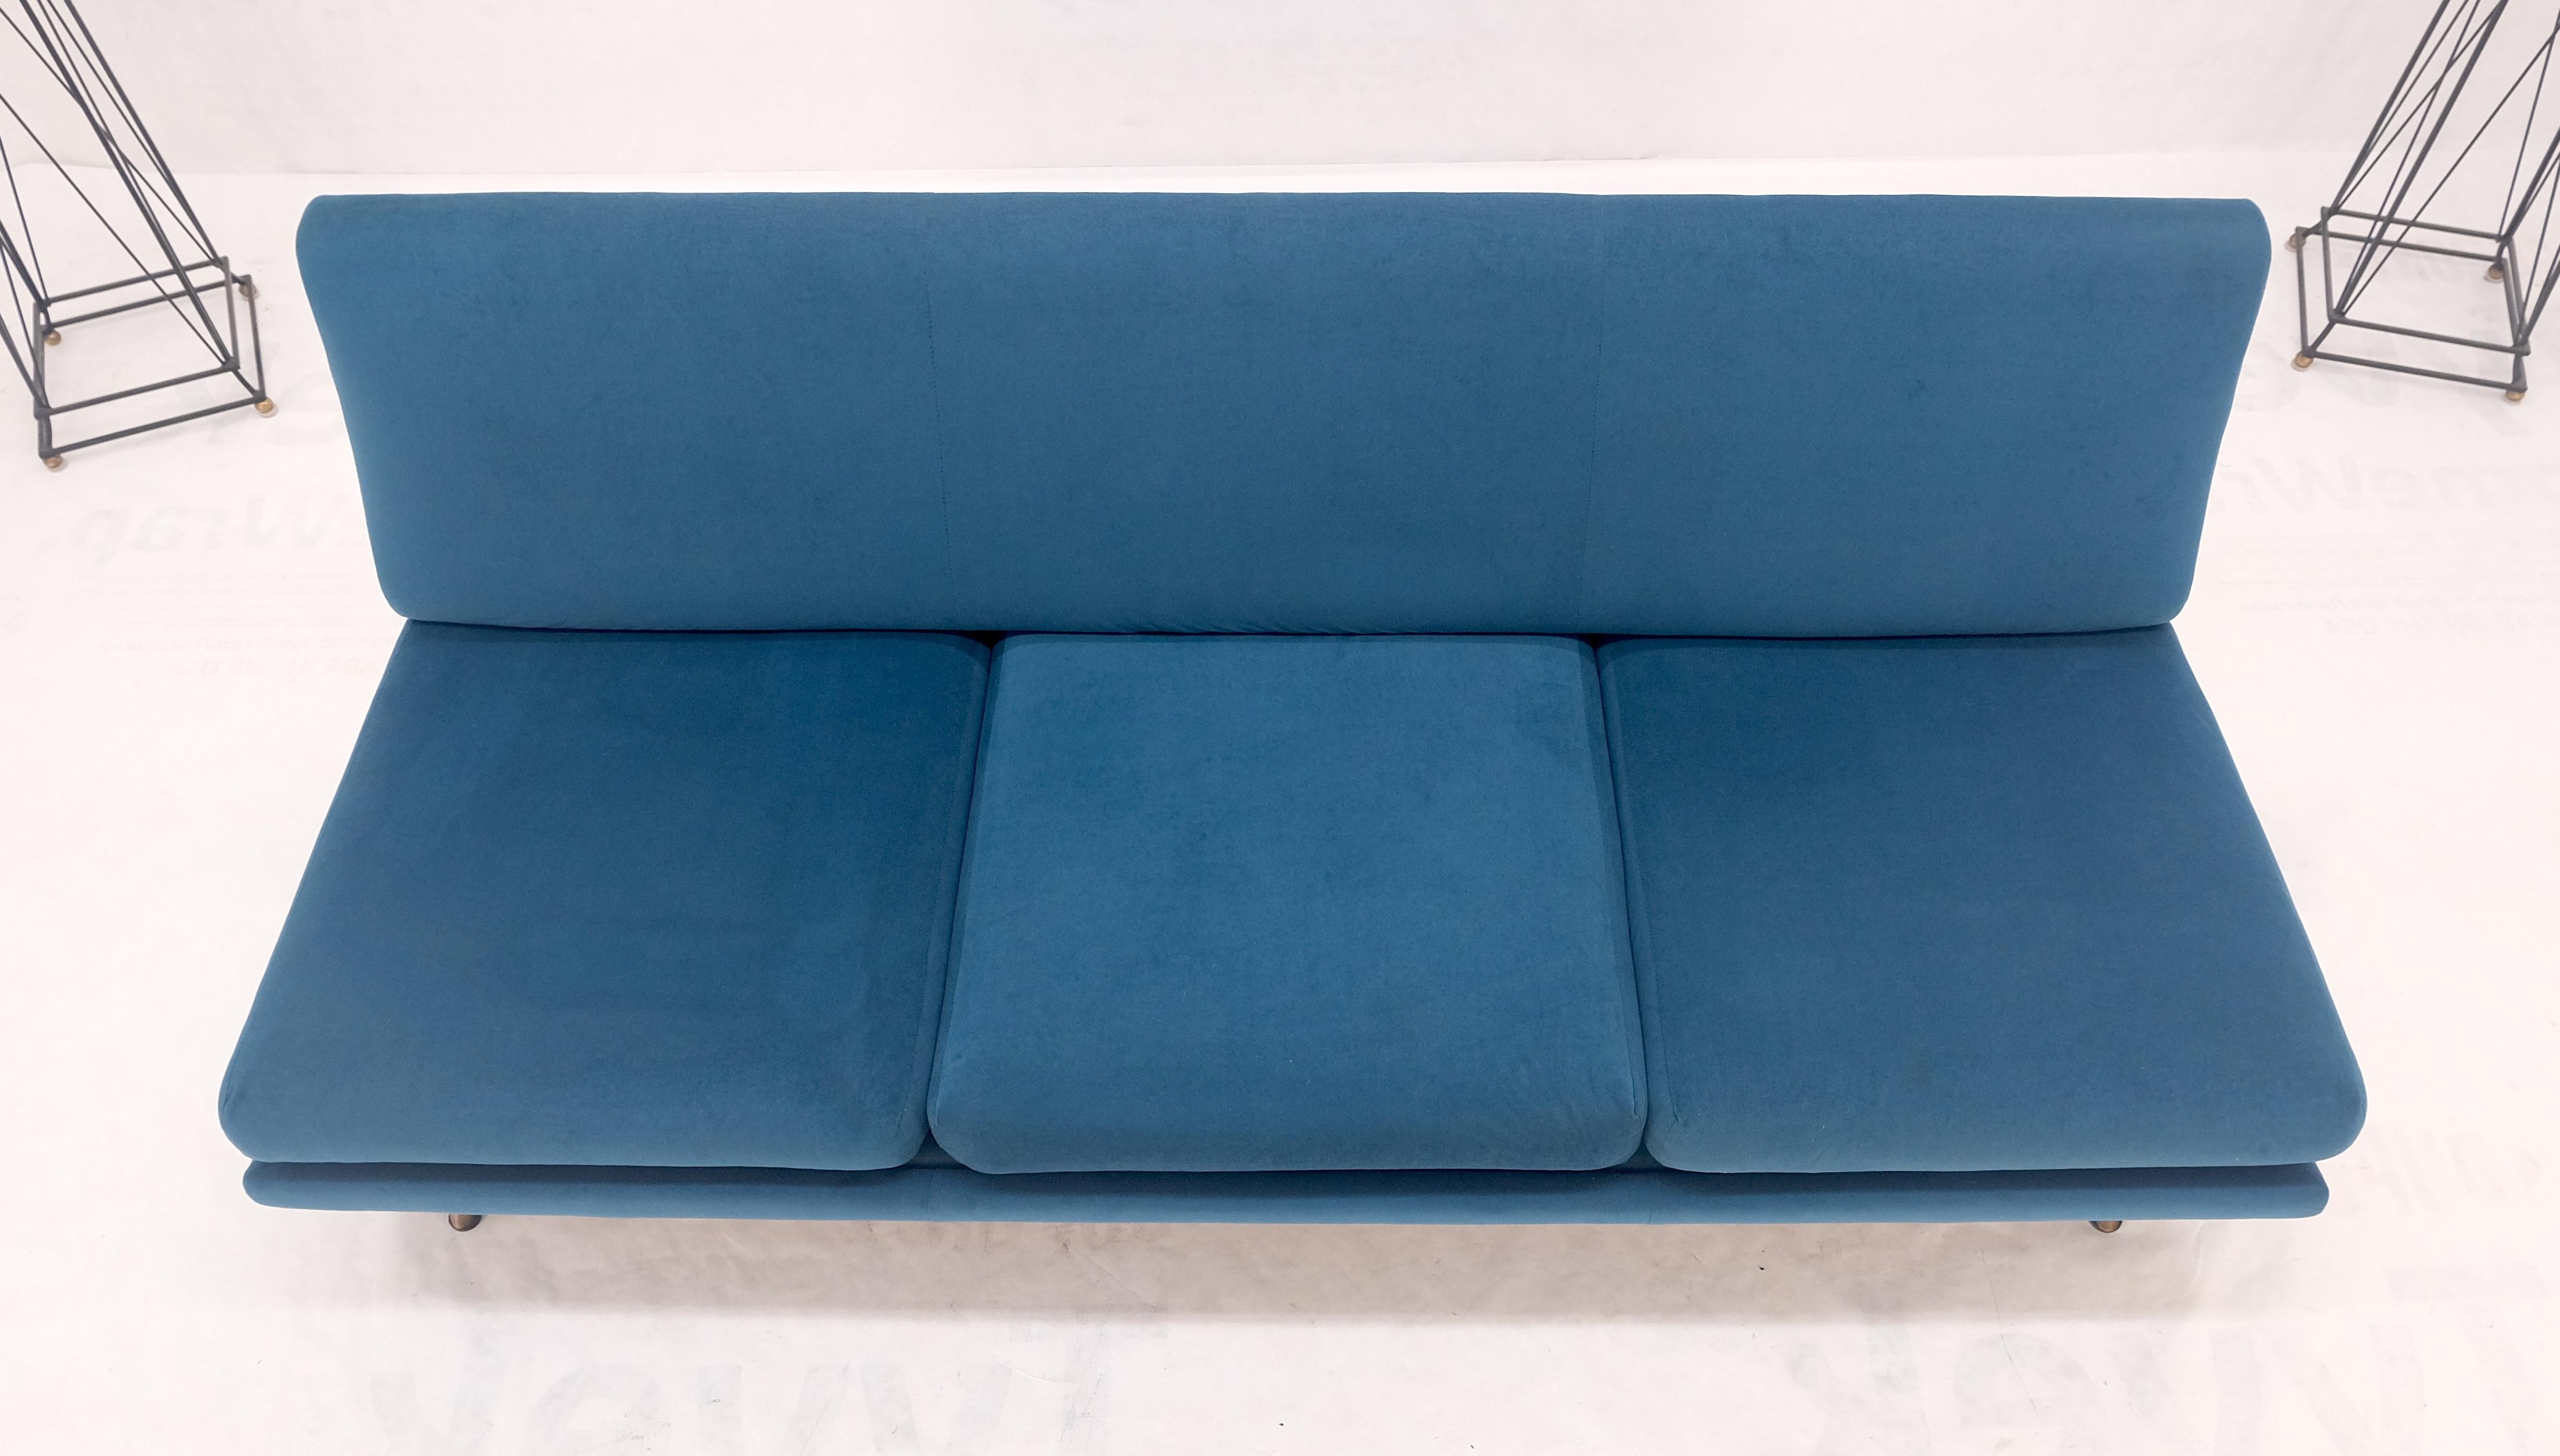 Marco Zanuso Sofa for Arflex Mid Century Italian Modern Teal Upholstery Clean! For Sale 2